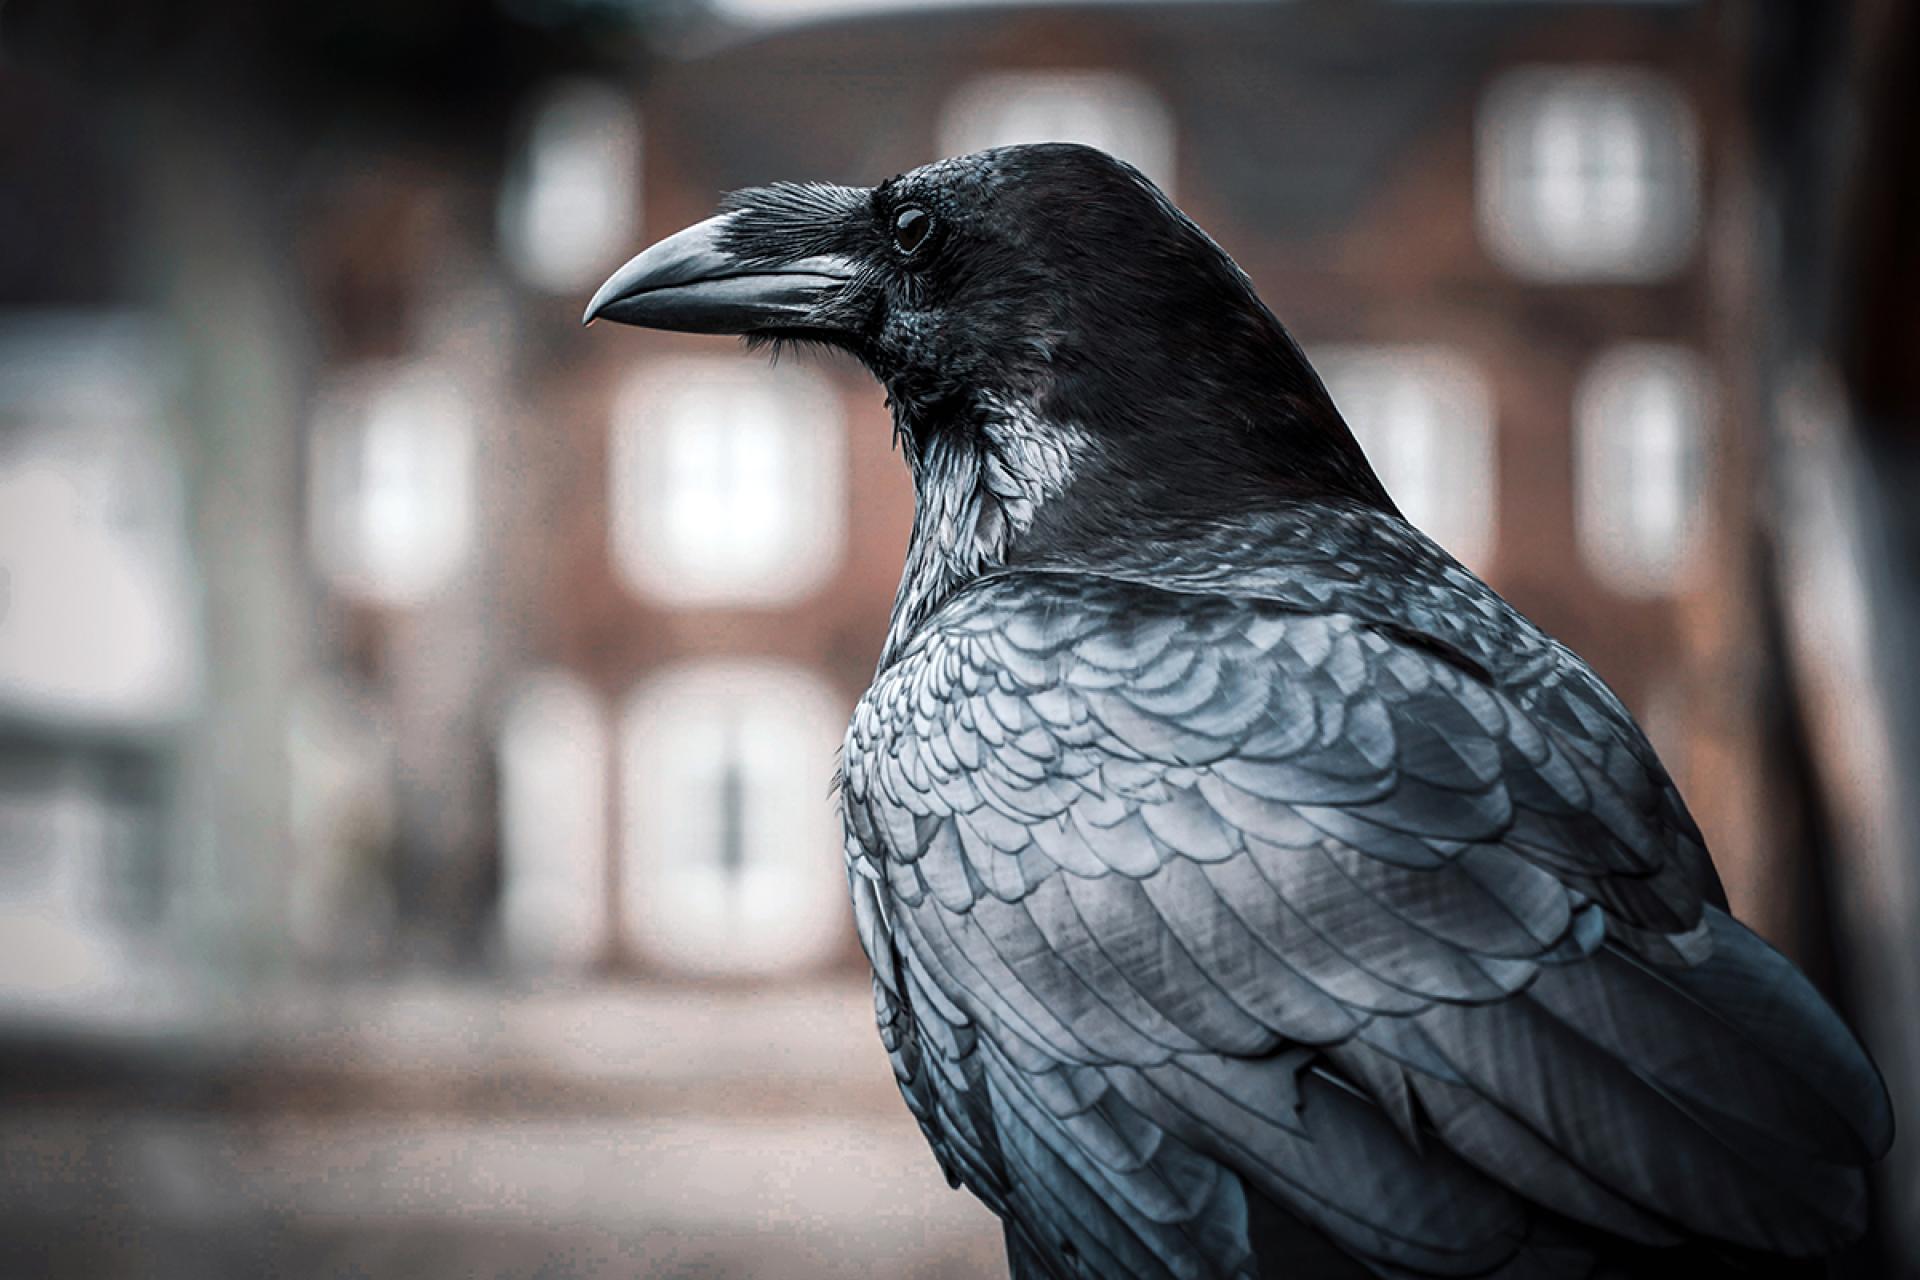 London Photography Awards Winner - The Raven